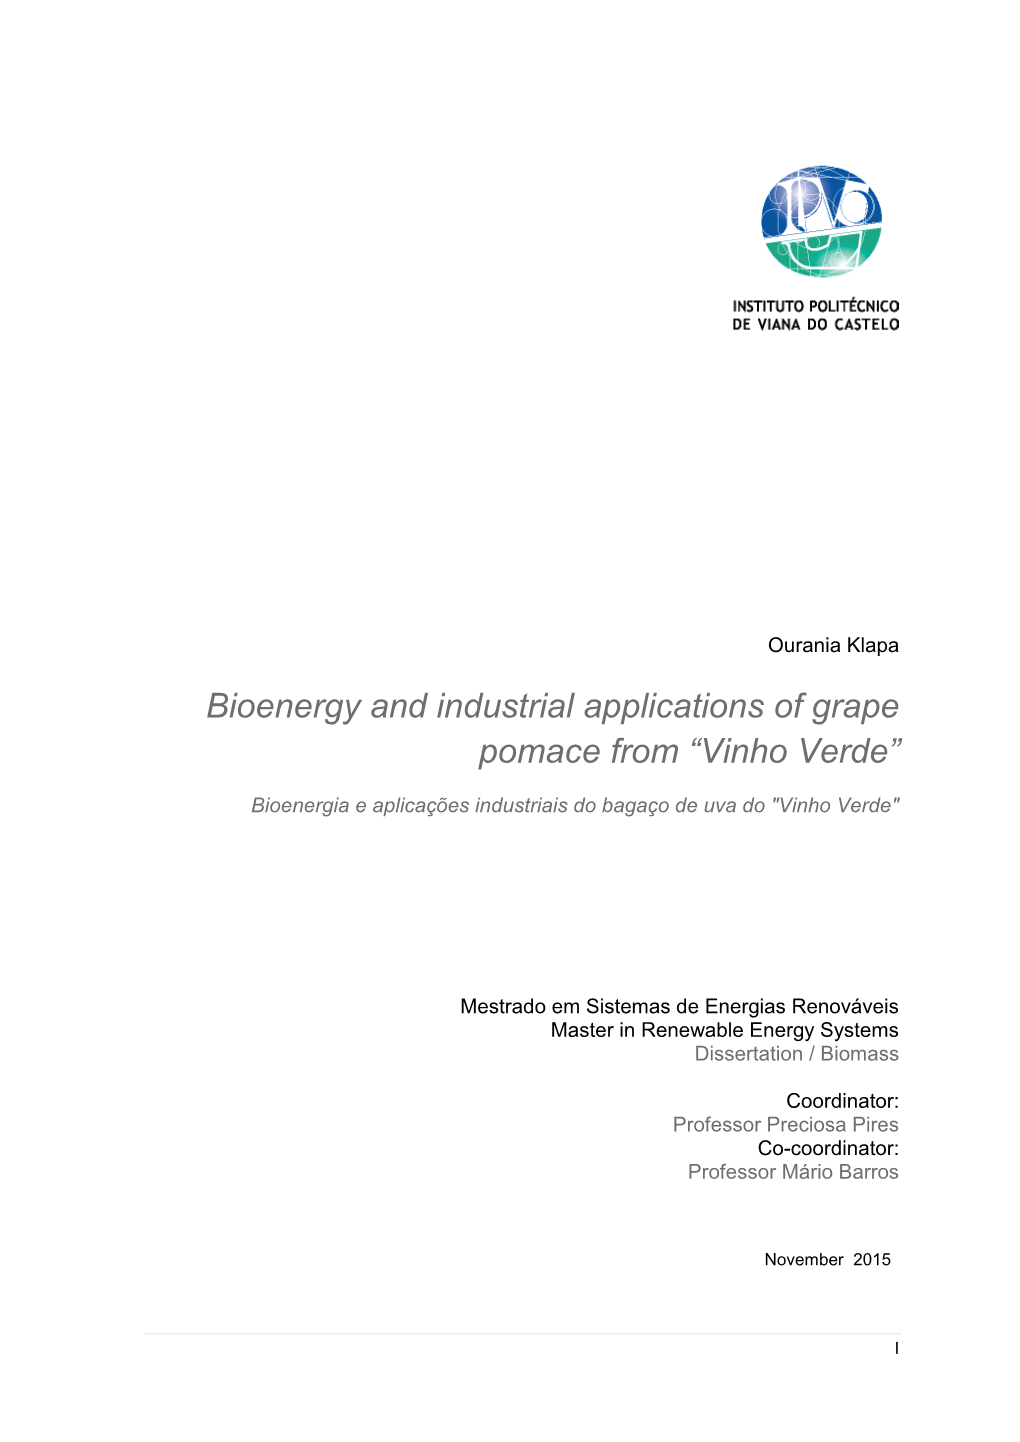 Bioenergy and Industrial Applications of Grape Pomace from “Vinho Verde”